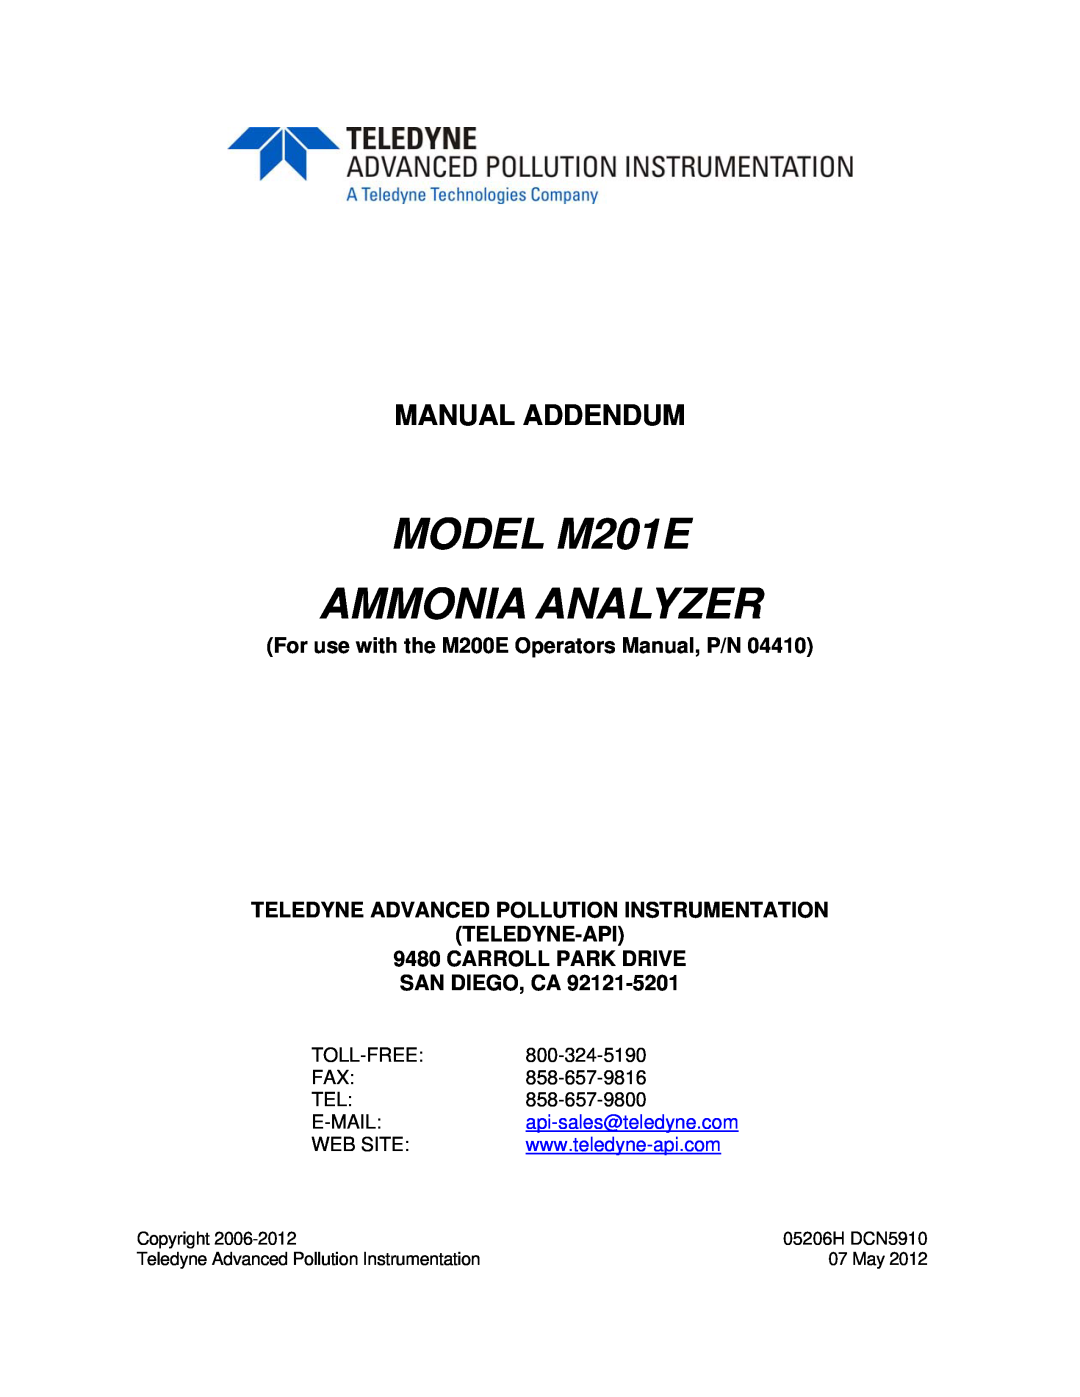 Teledyne manual Manual Addendum, MODEL M201E AMMONIA ANALYZER, api-sales@teledyne.com 